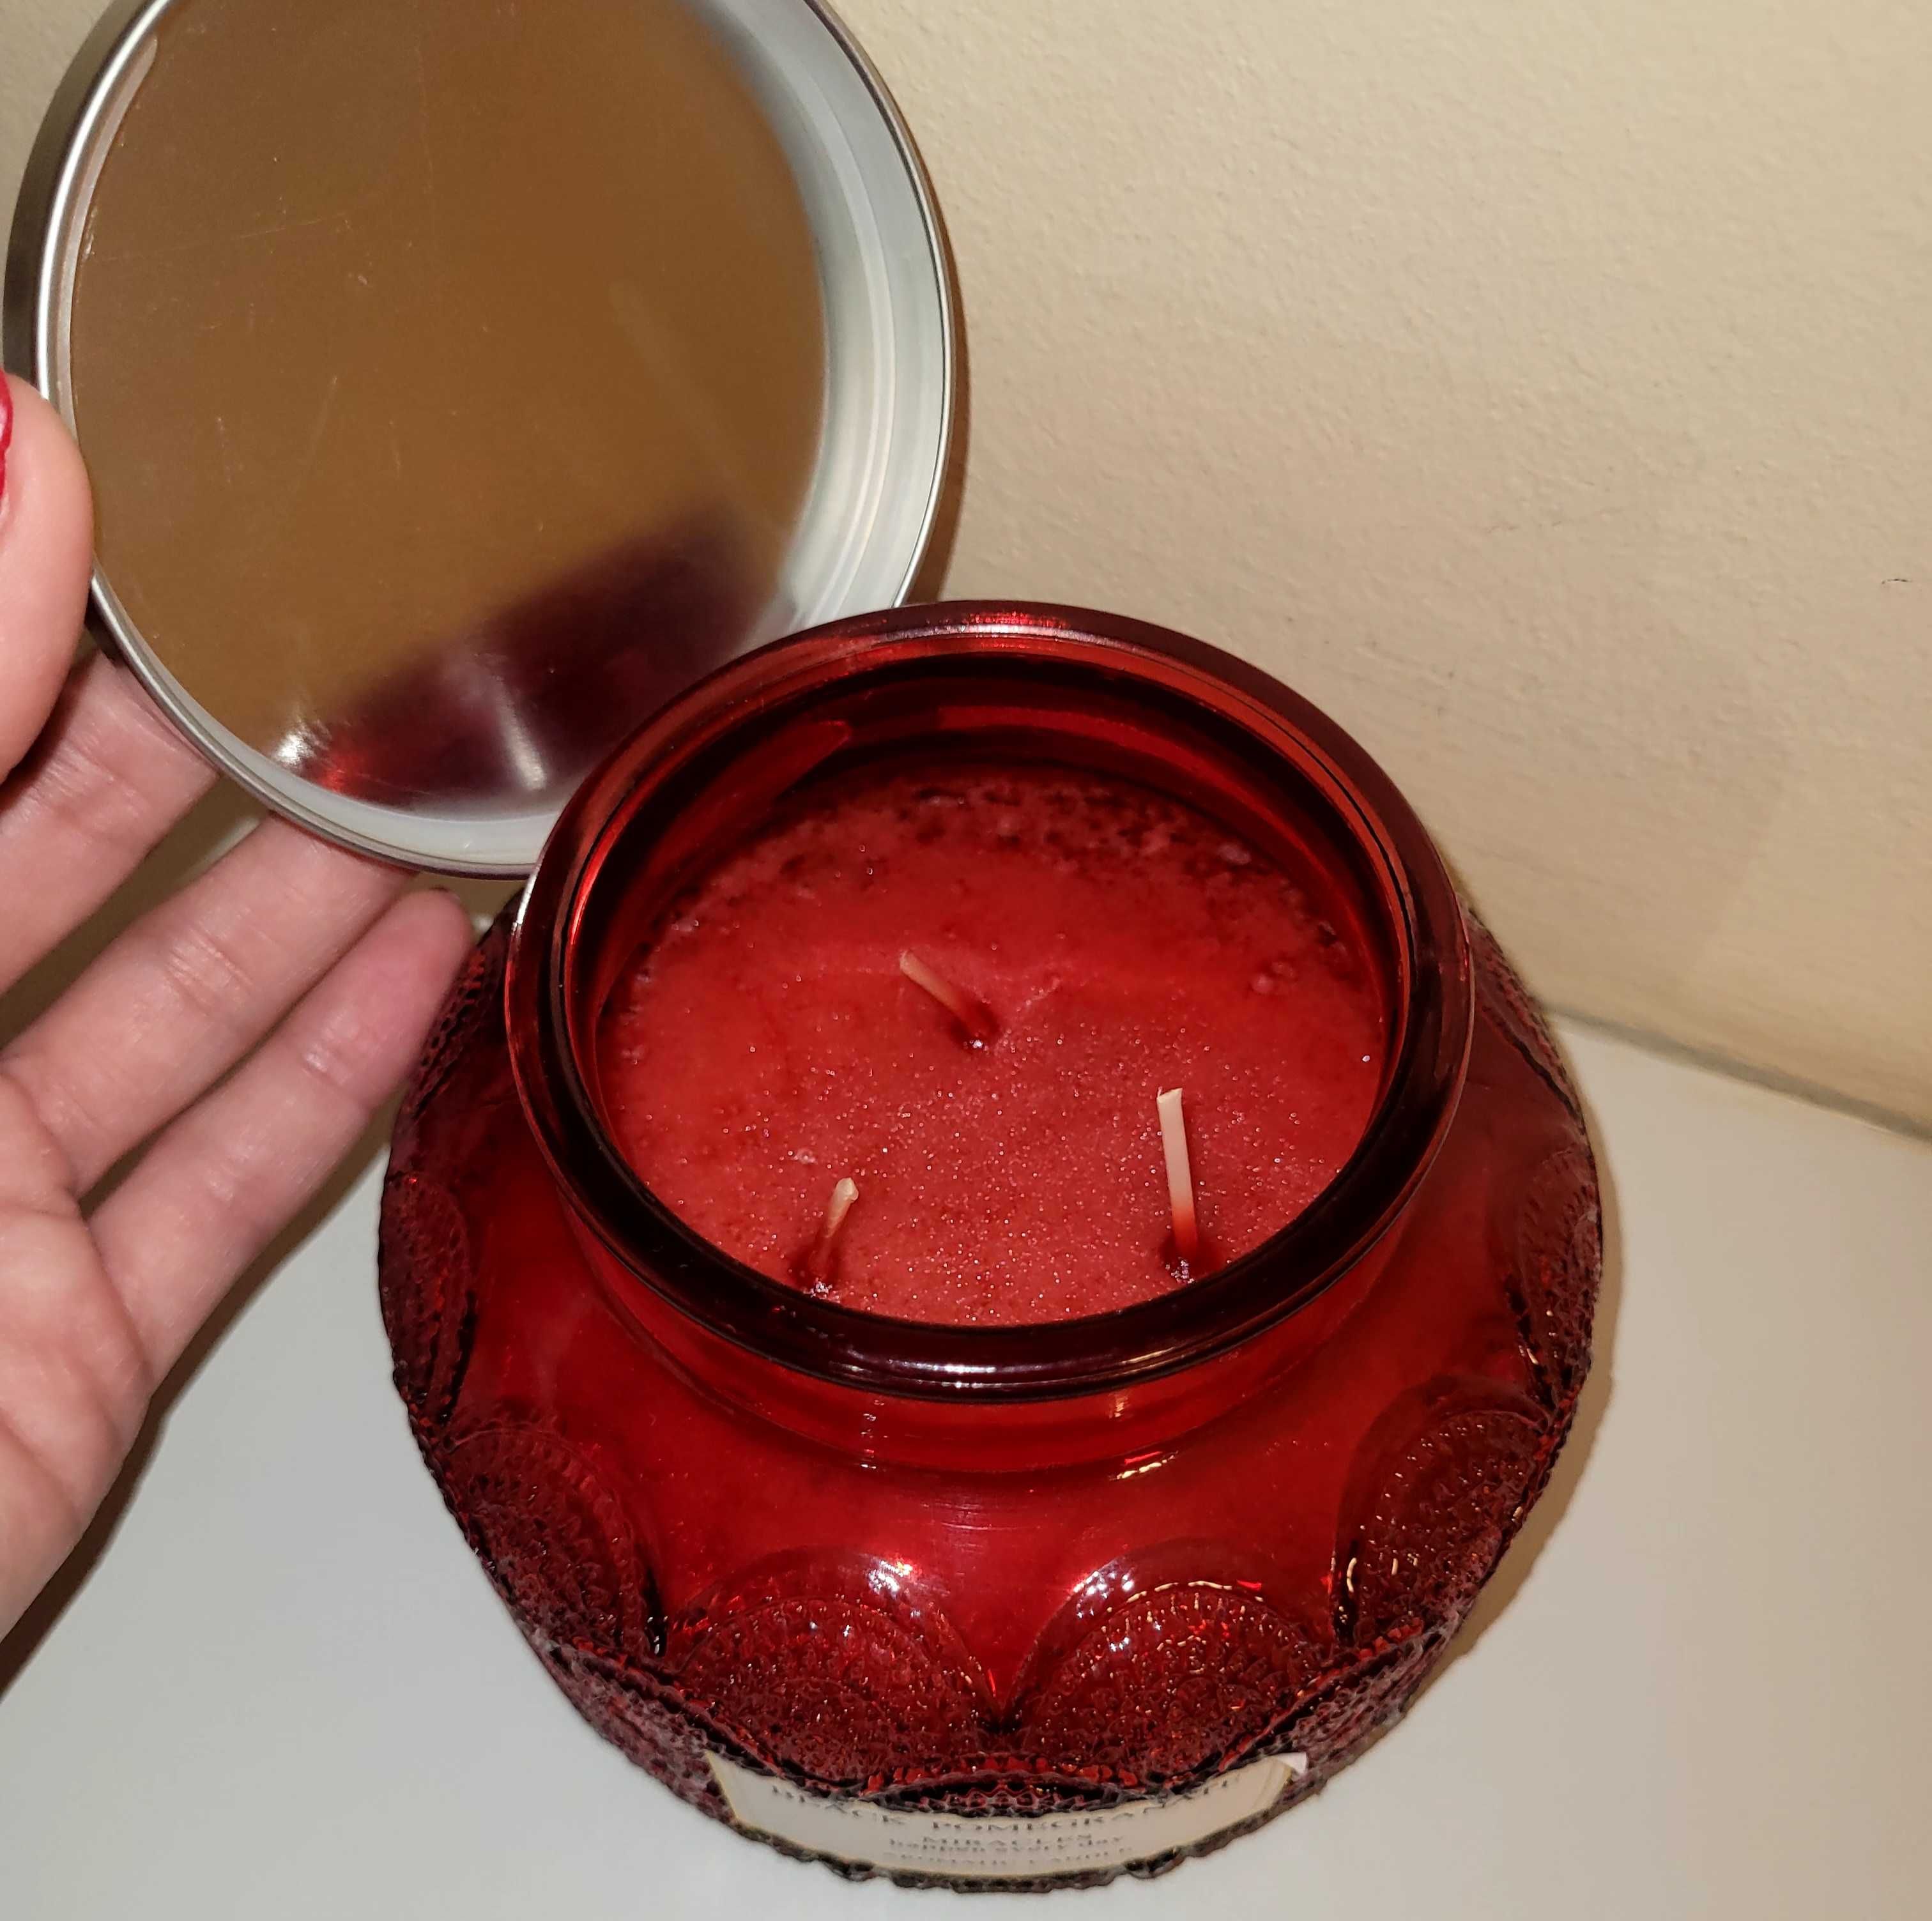 Lumanare decorativa Black Pomegranate Aromatic candle